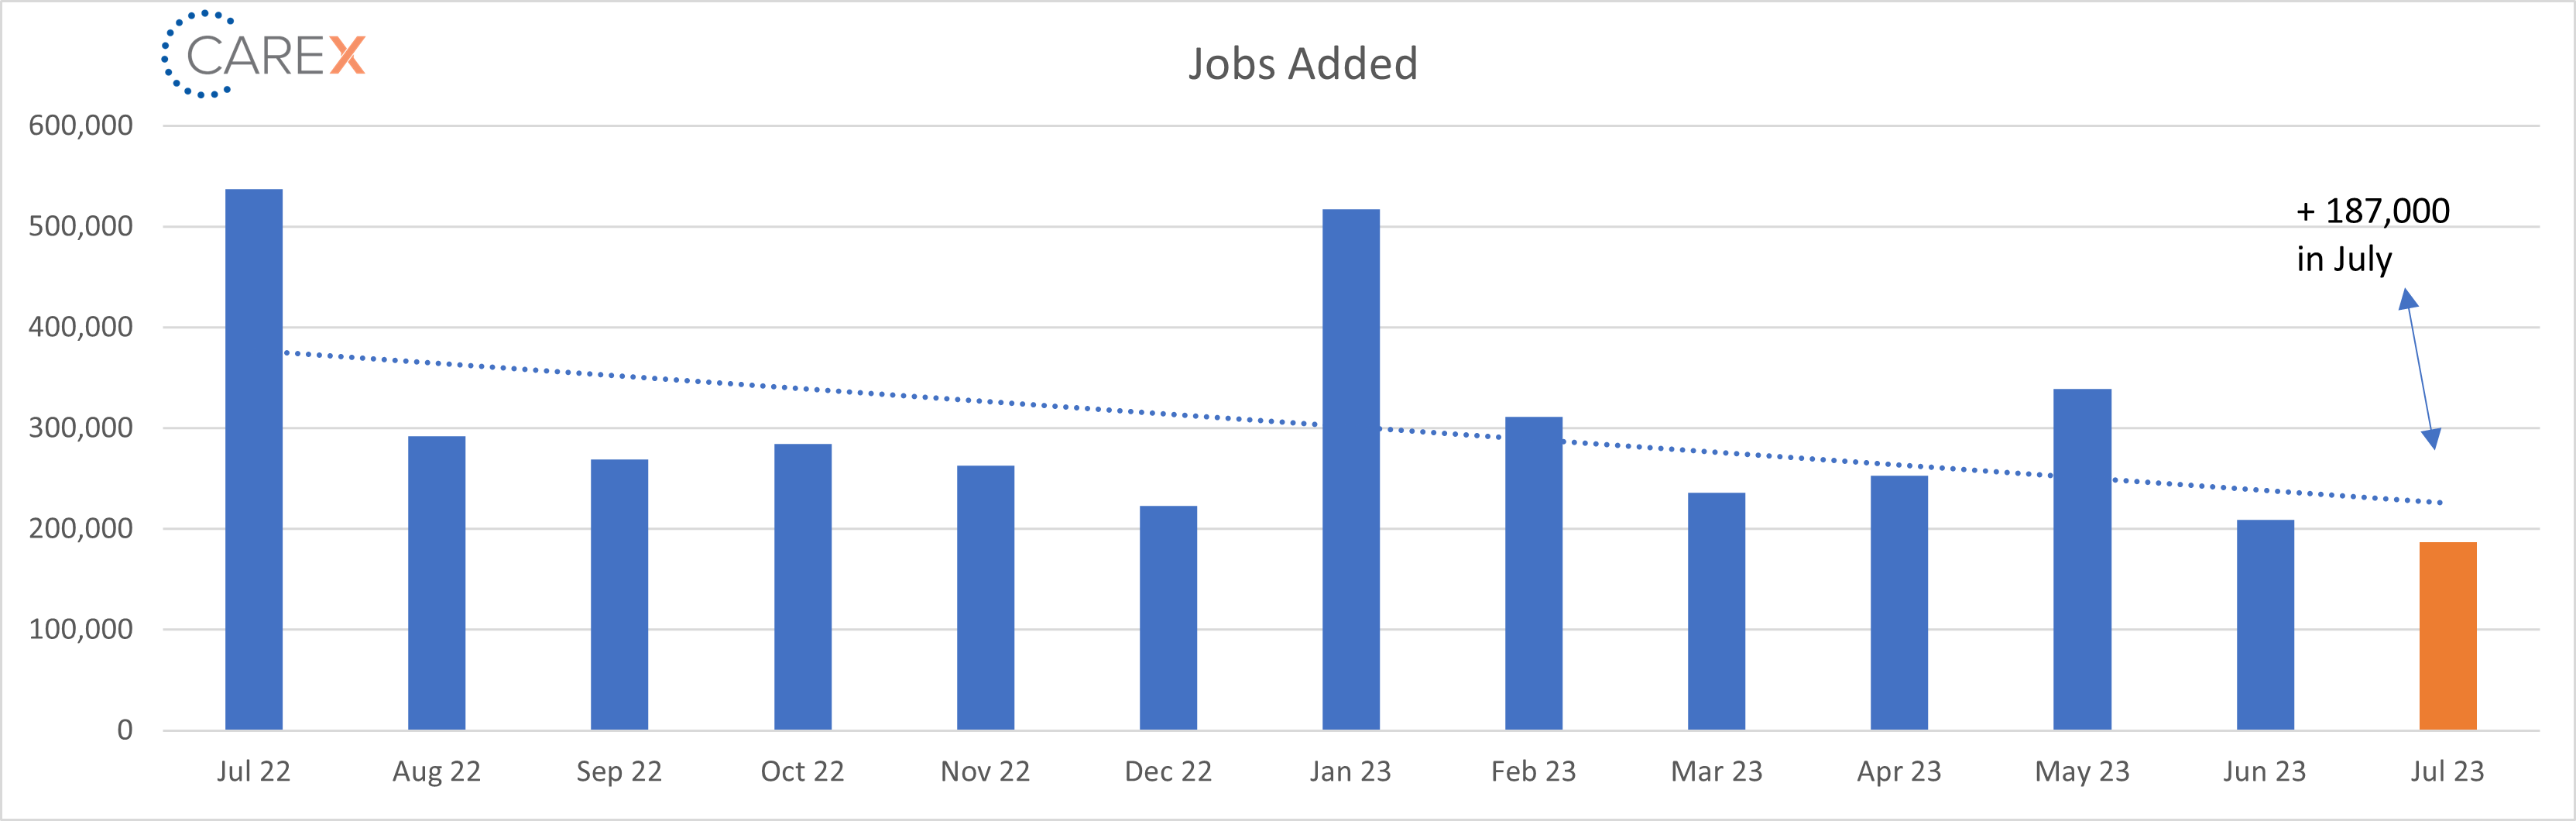 jobs added graph